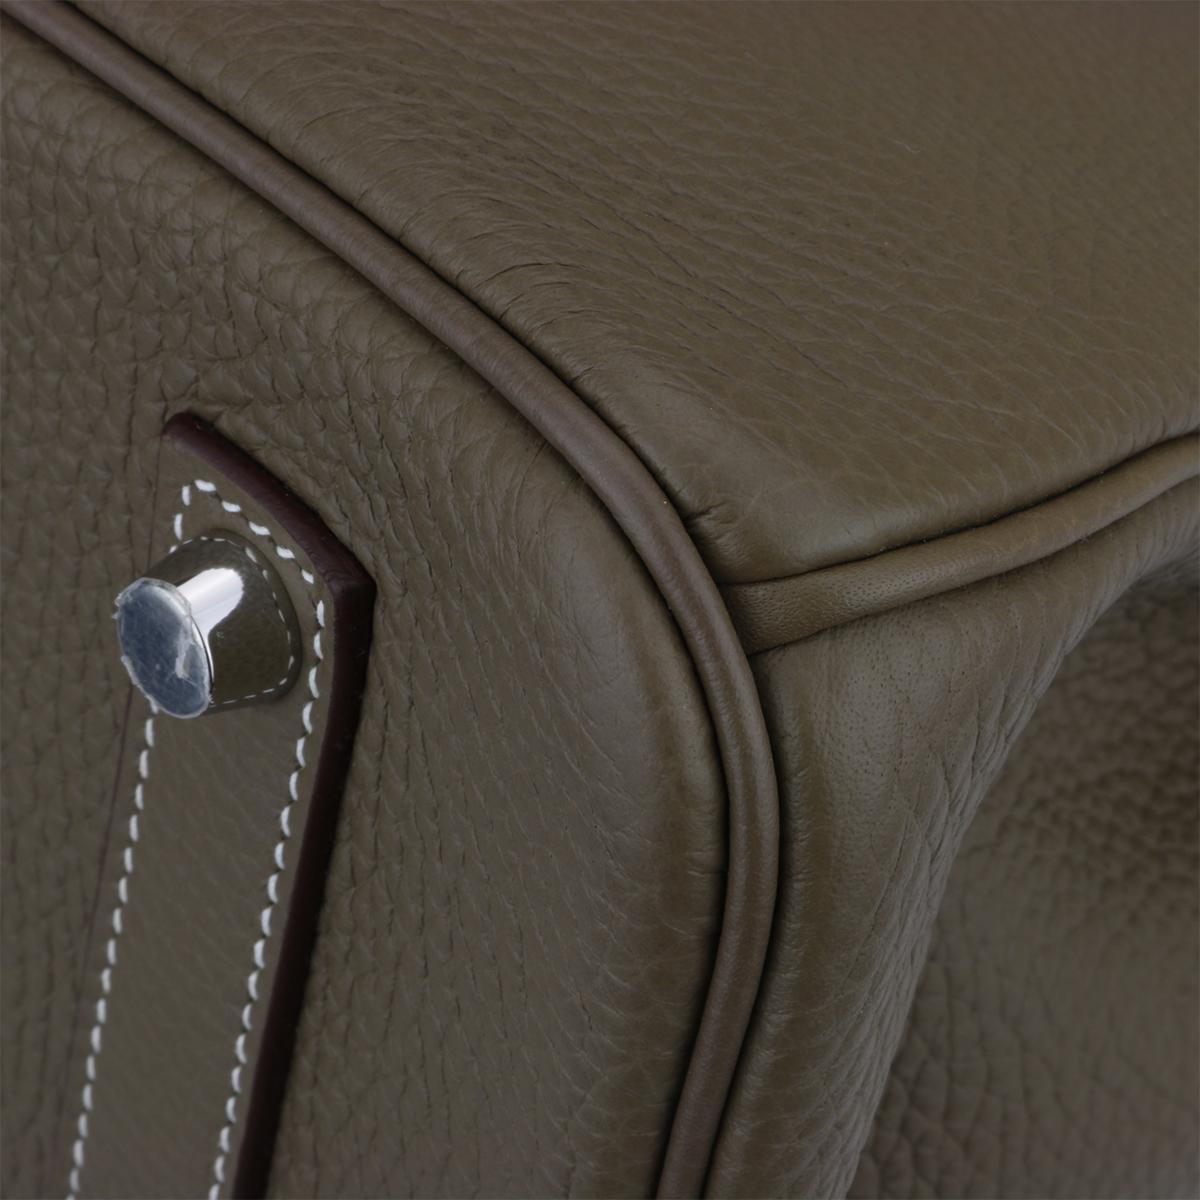 Hermès Birkin 35cm Bag Etoupe Togo Leather with Palladium Hardware Stamp C 2018 4